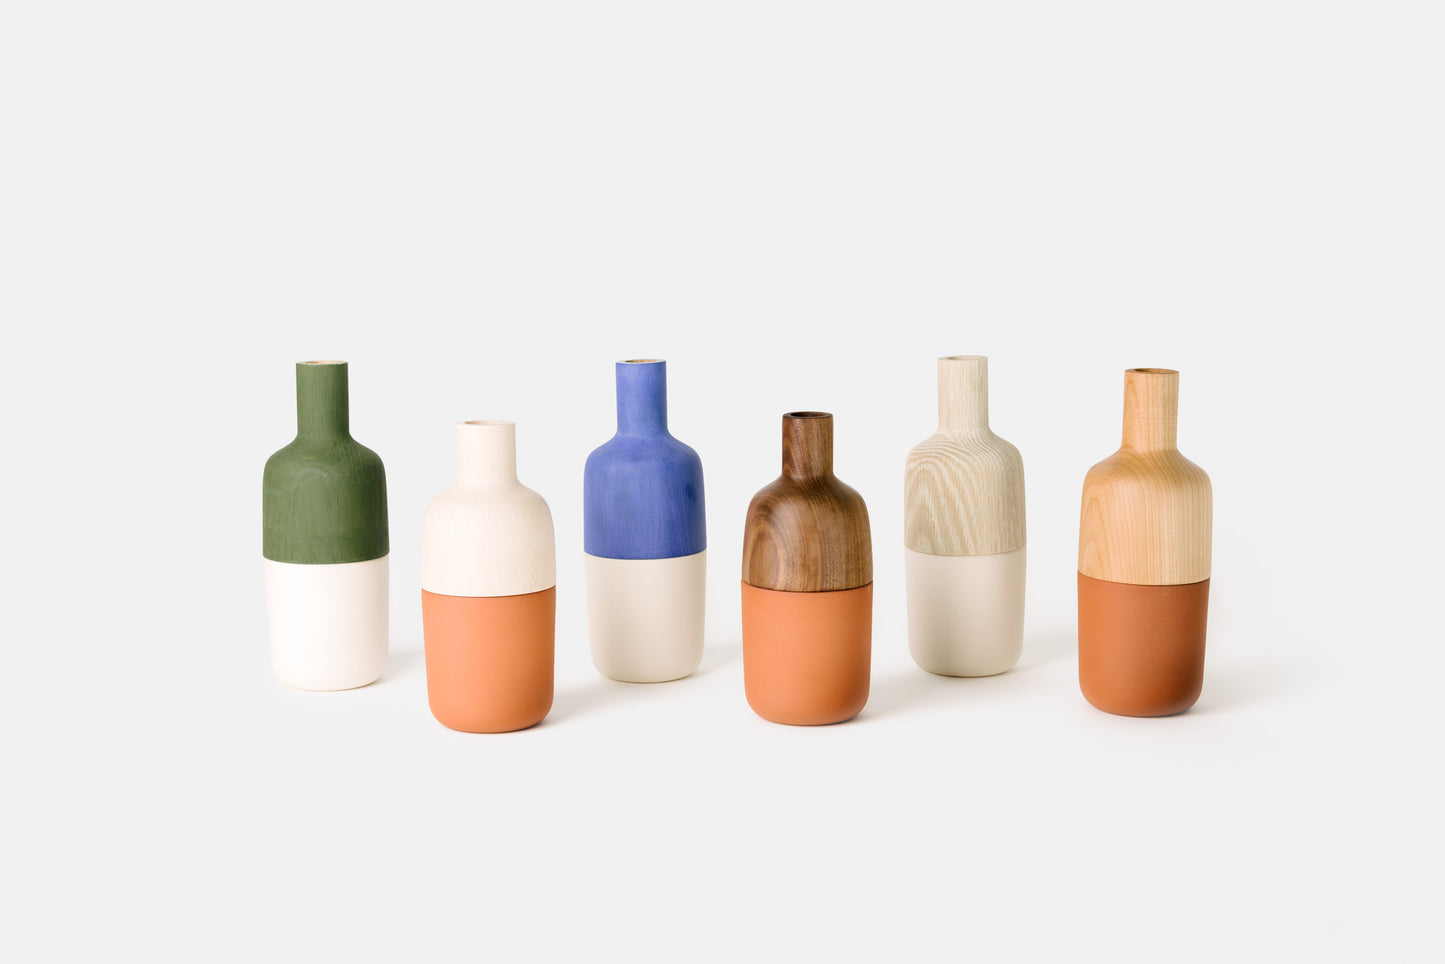 Mix of hardwood and ceramic marais vases by Melanie Abrantes Designs.